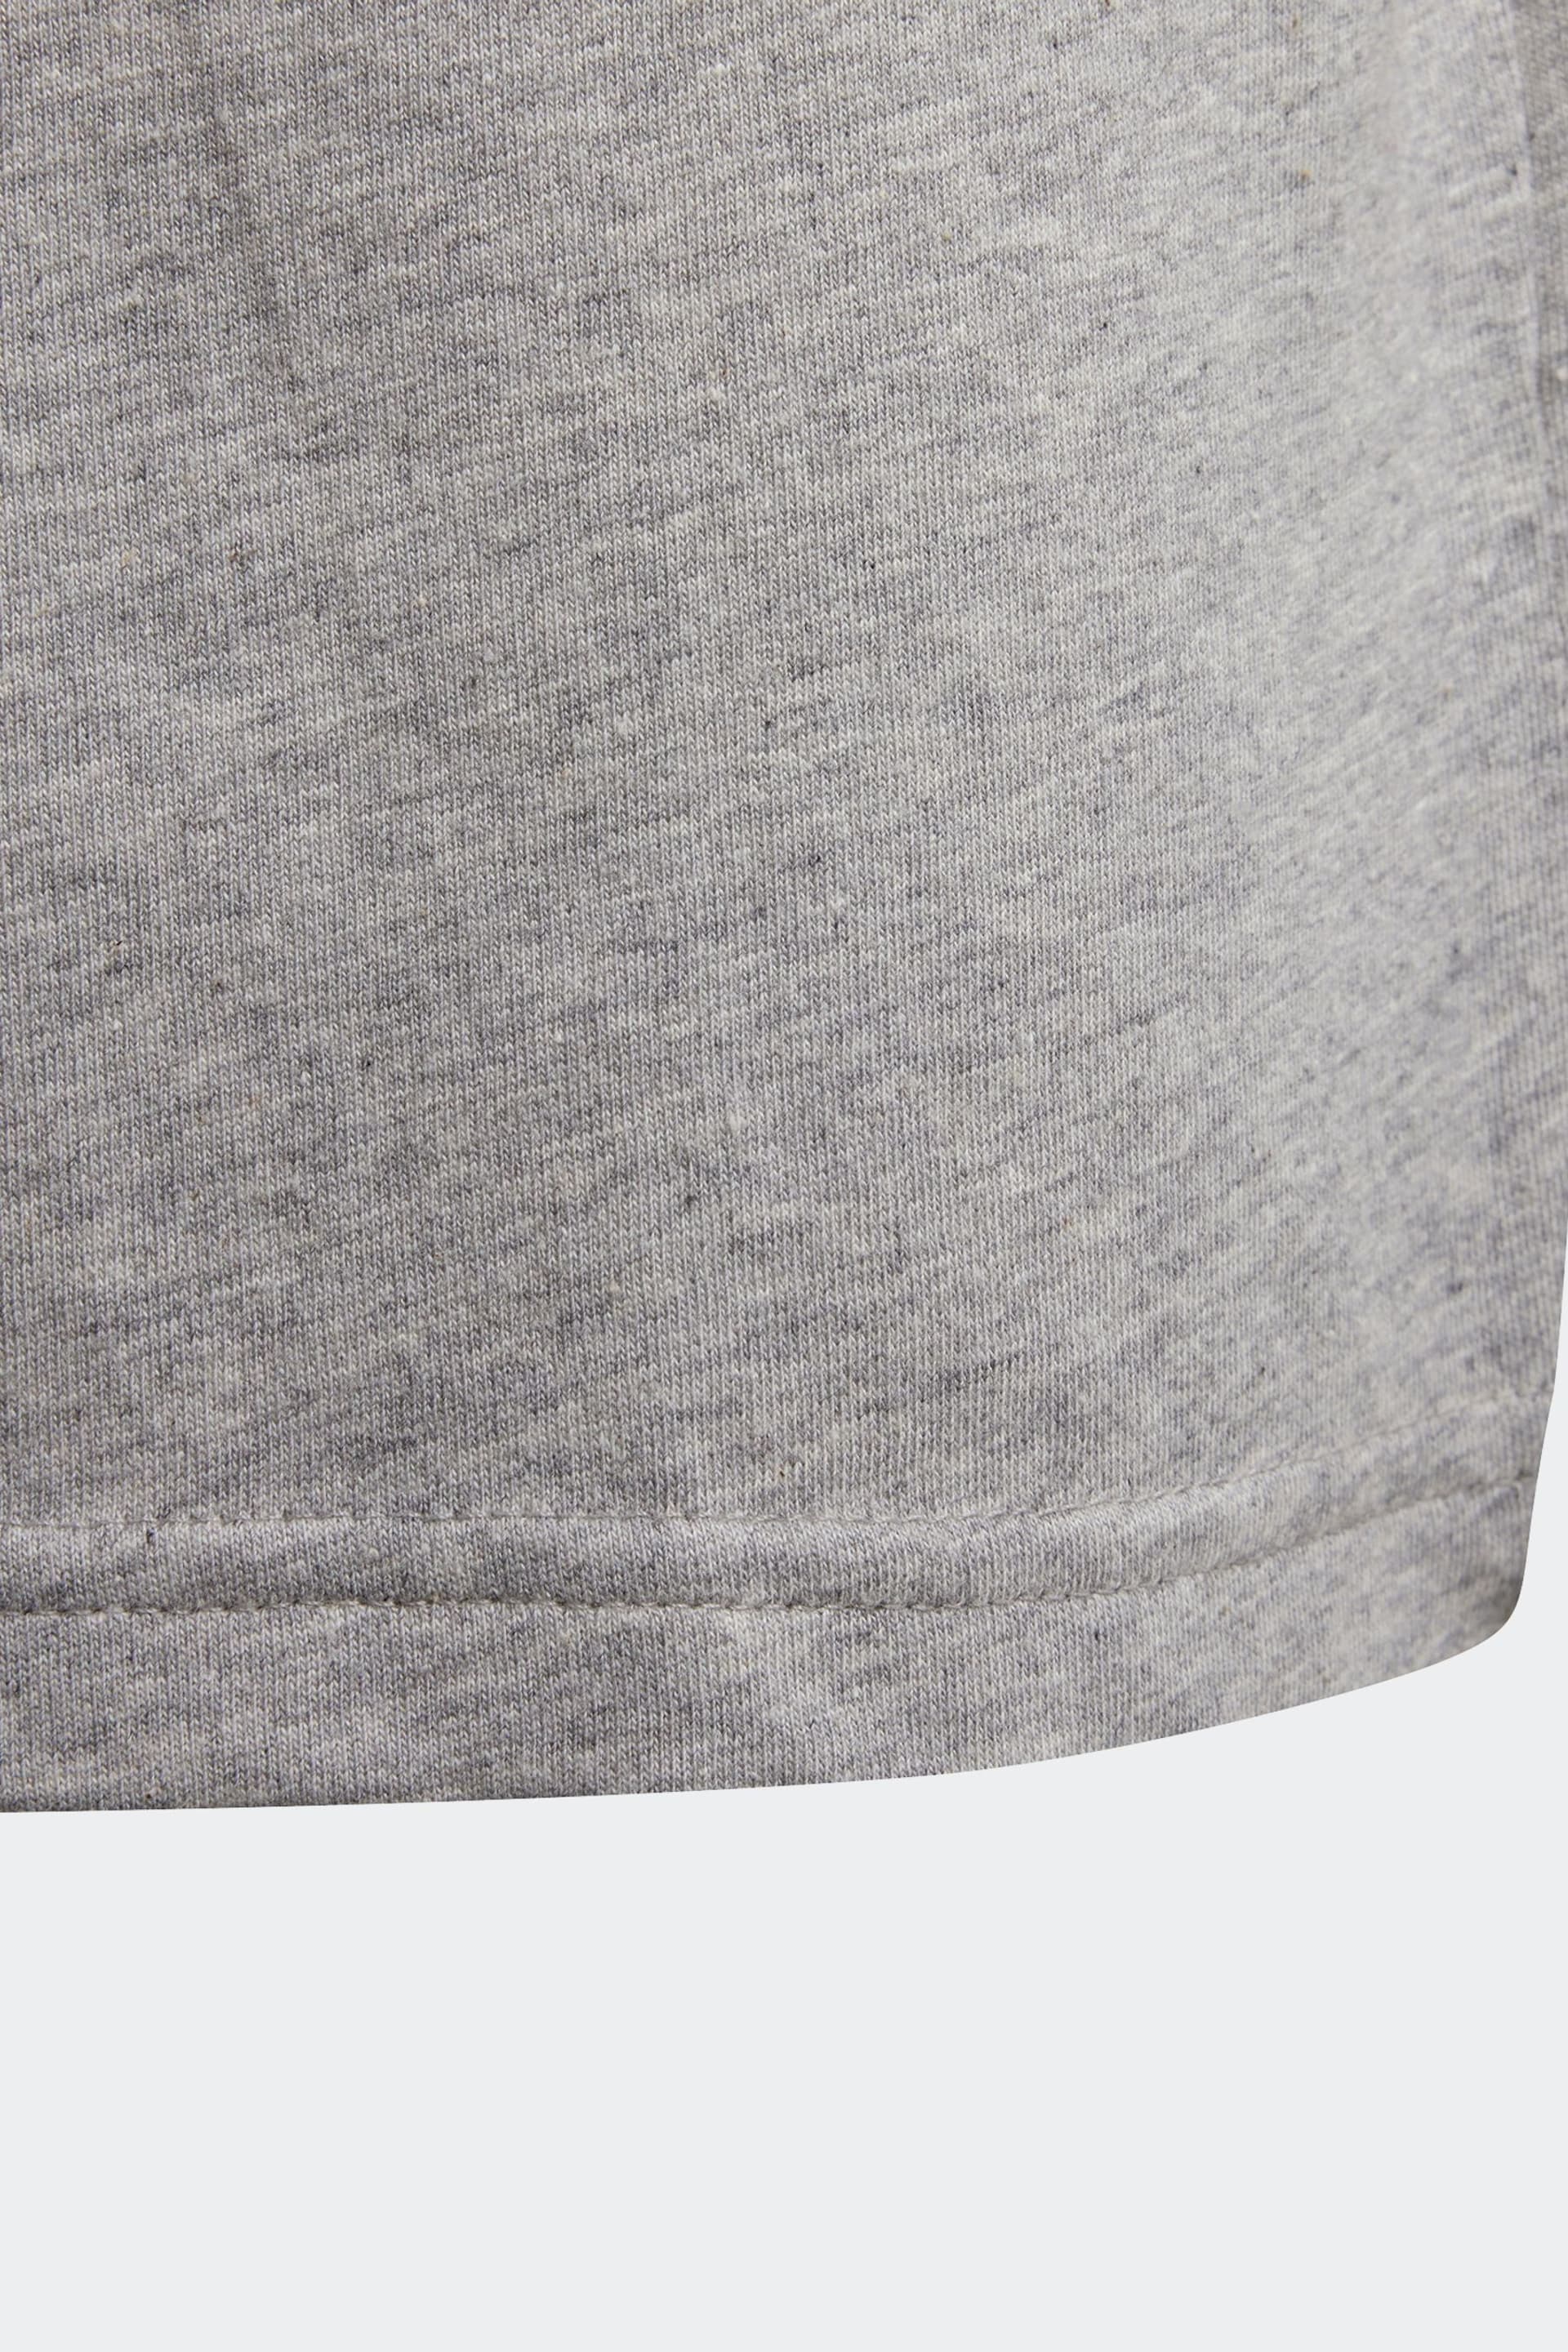 adidas Grey Essentials 3-Stripes Cotton T-Shirt - Image 5 of 5